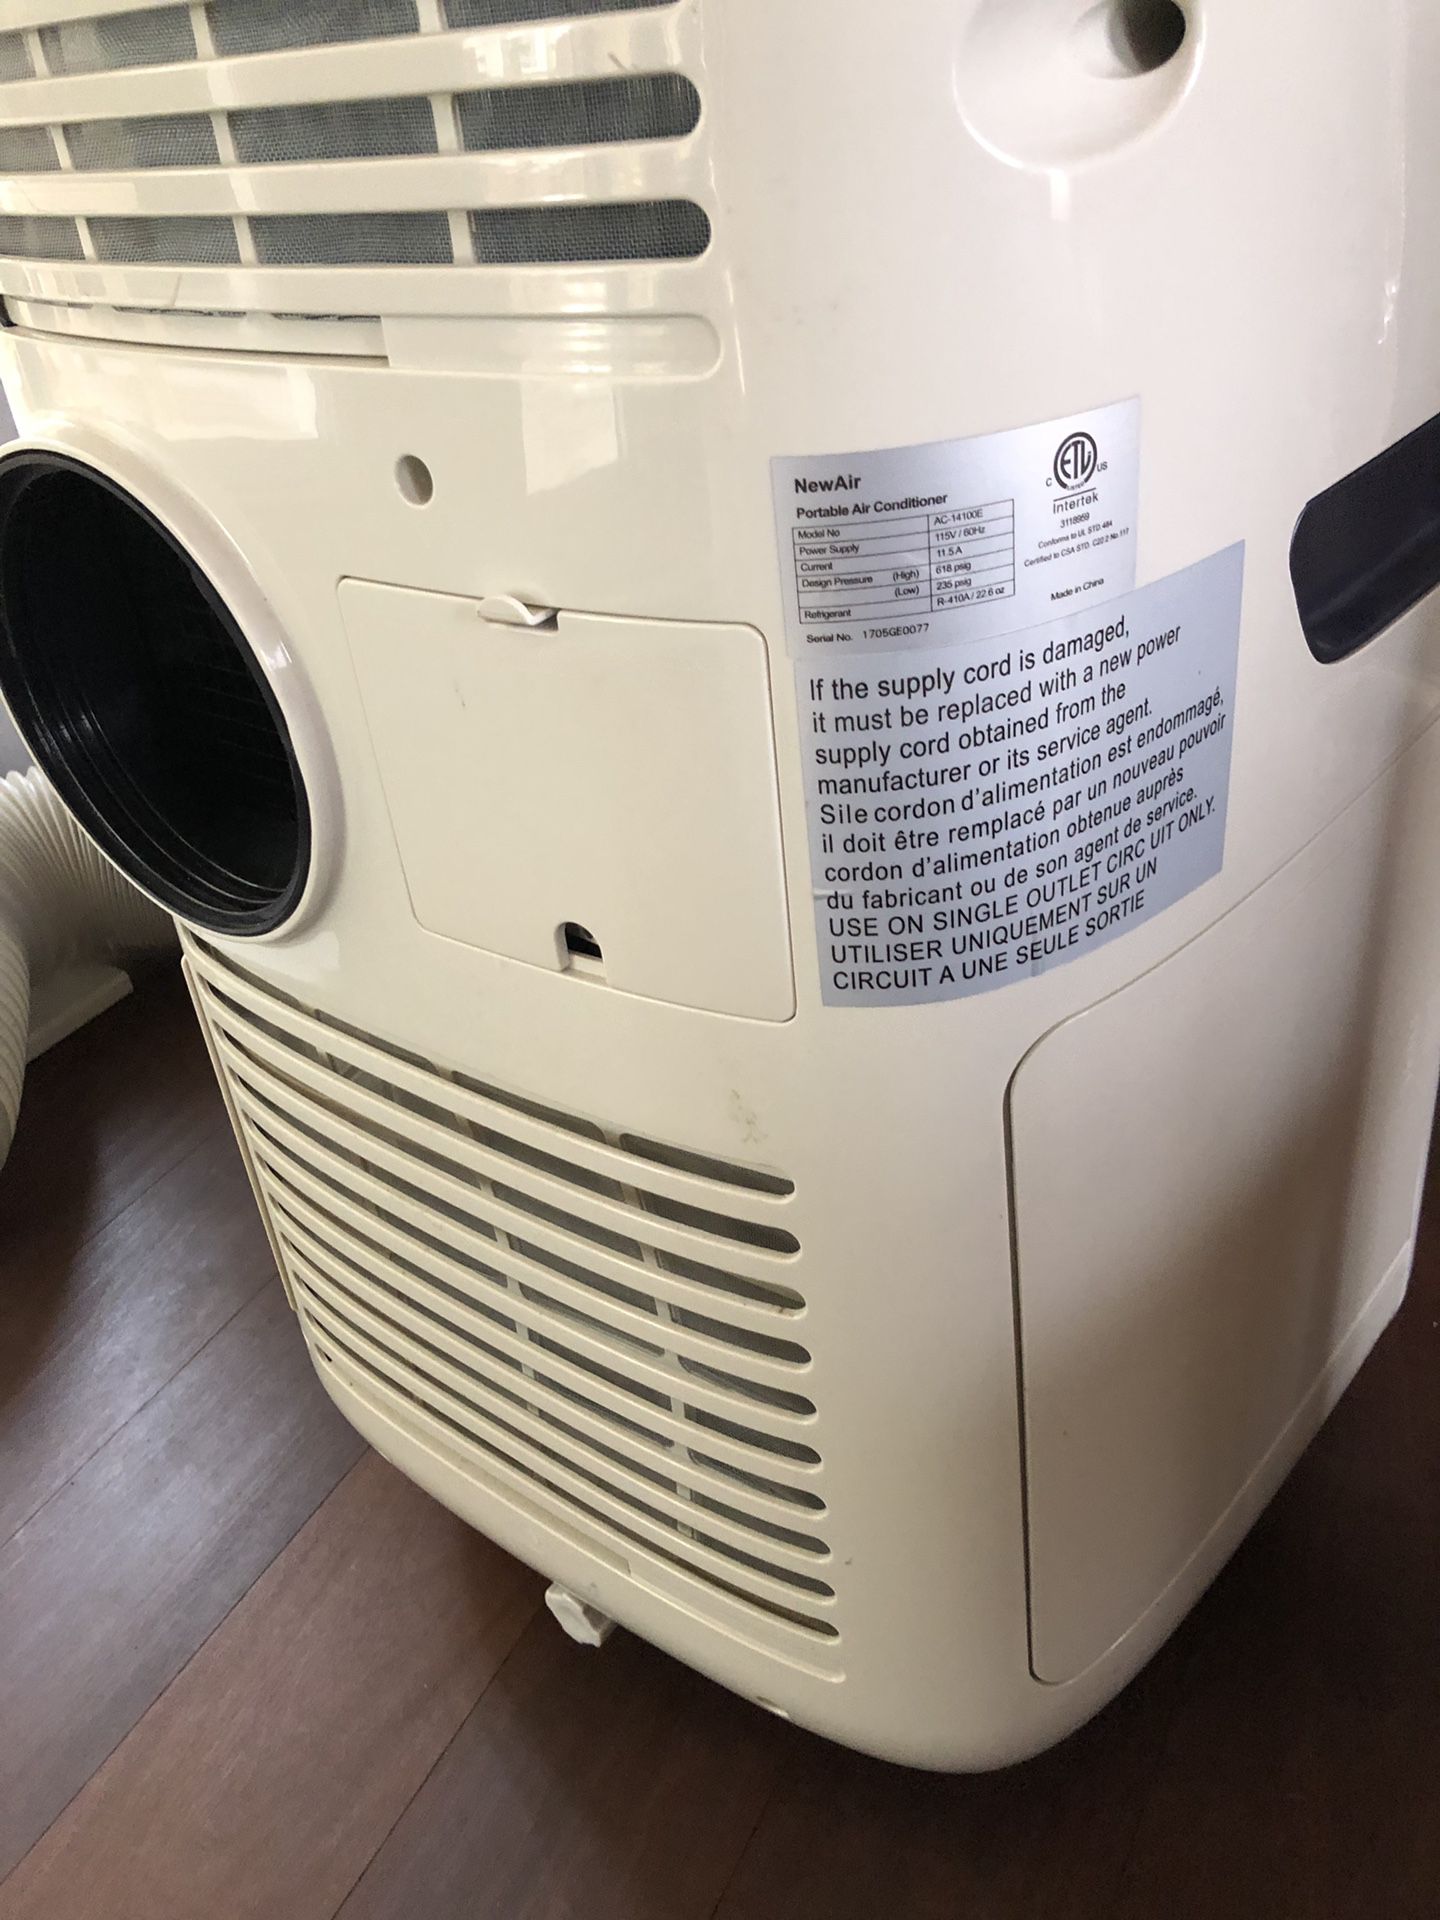 Newair Portable Air Conditioner